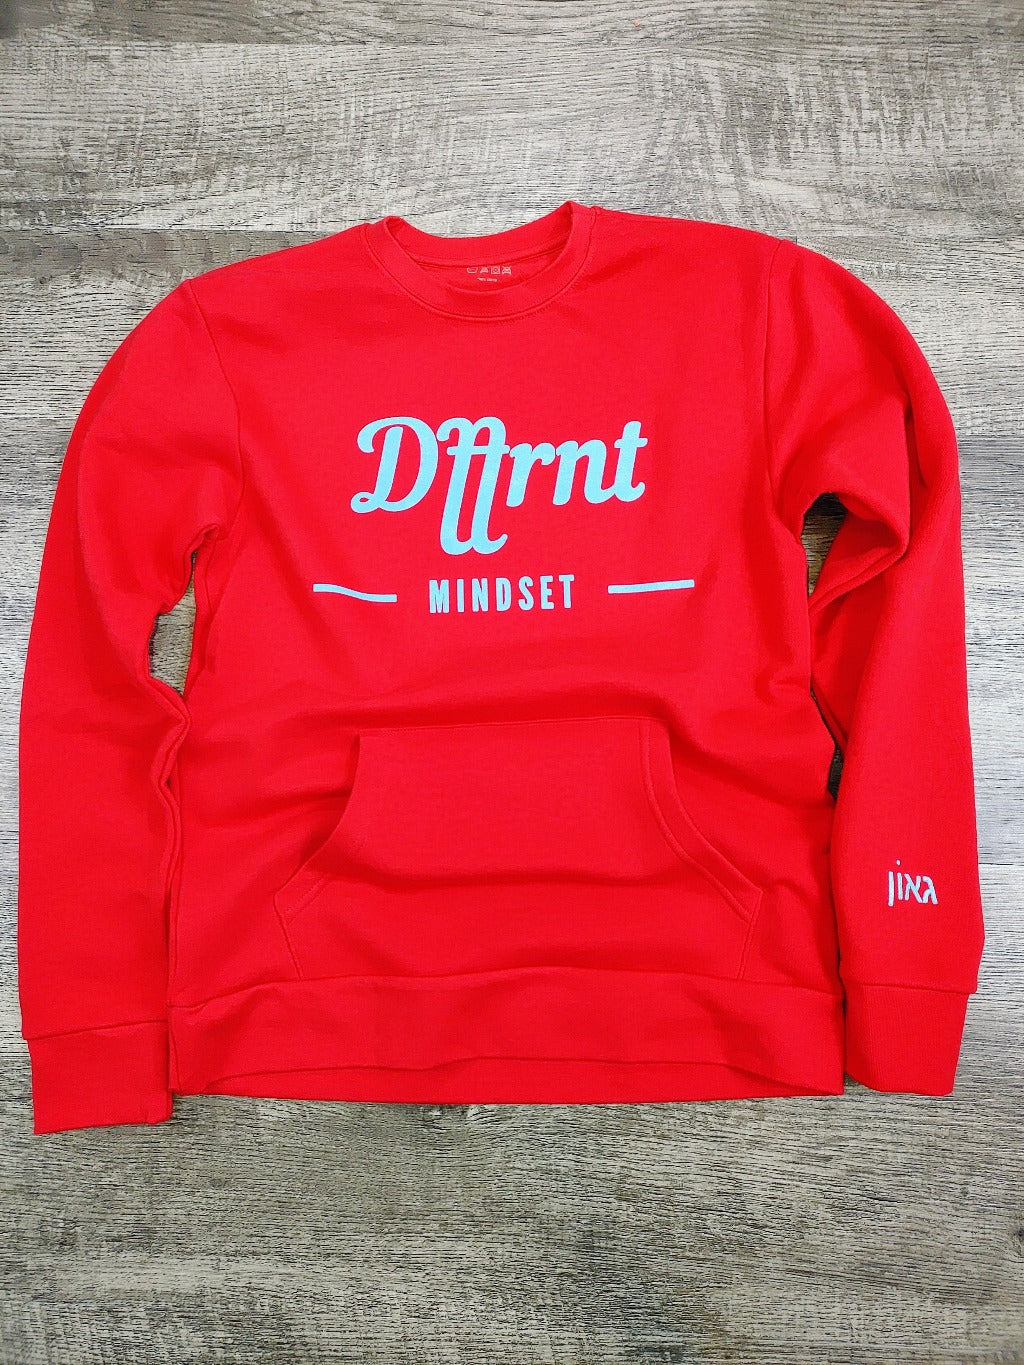 Dffrnt Mindset Sweatshirt- Red & Aqua